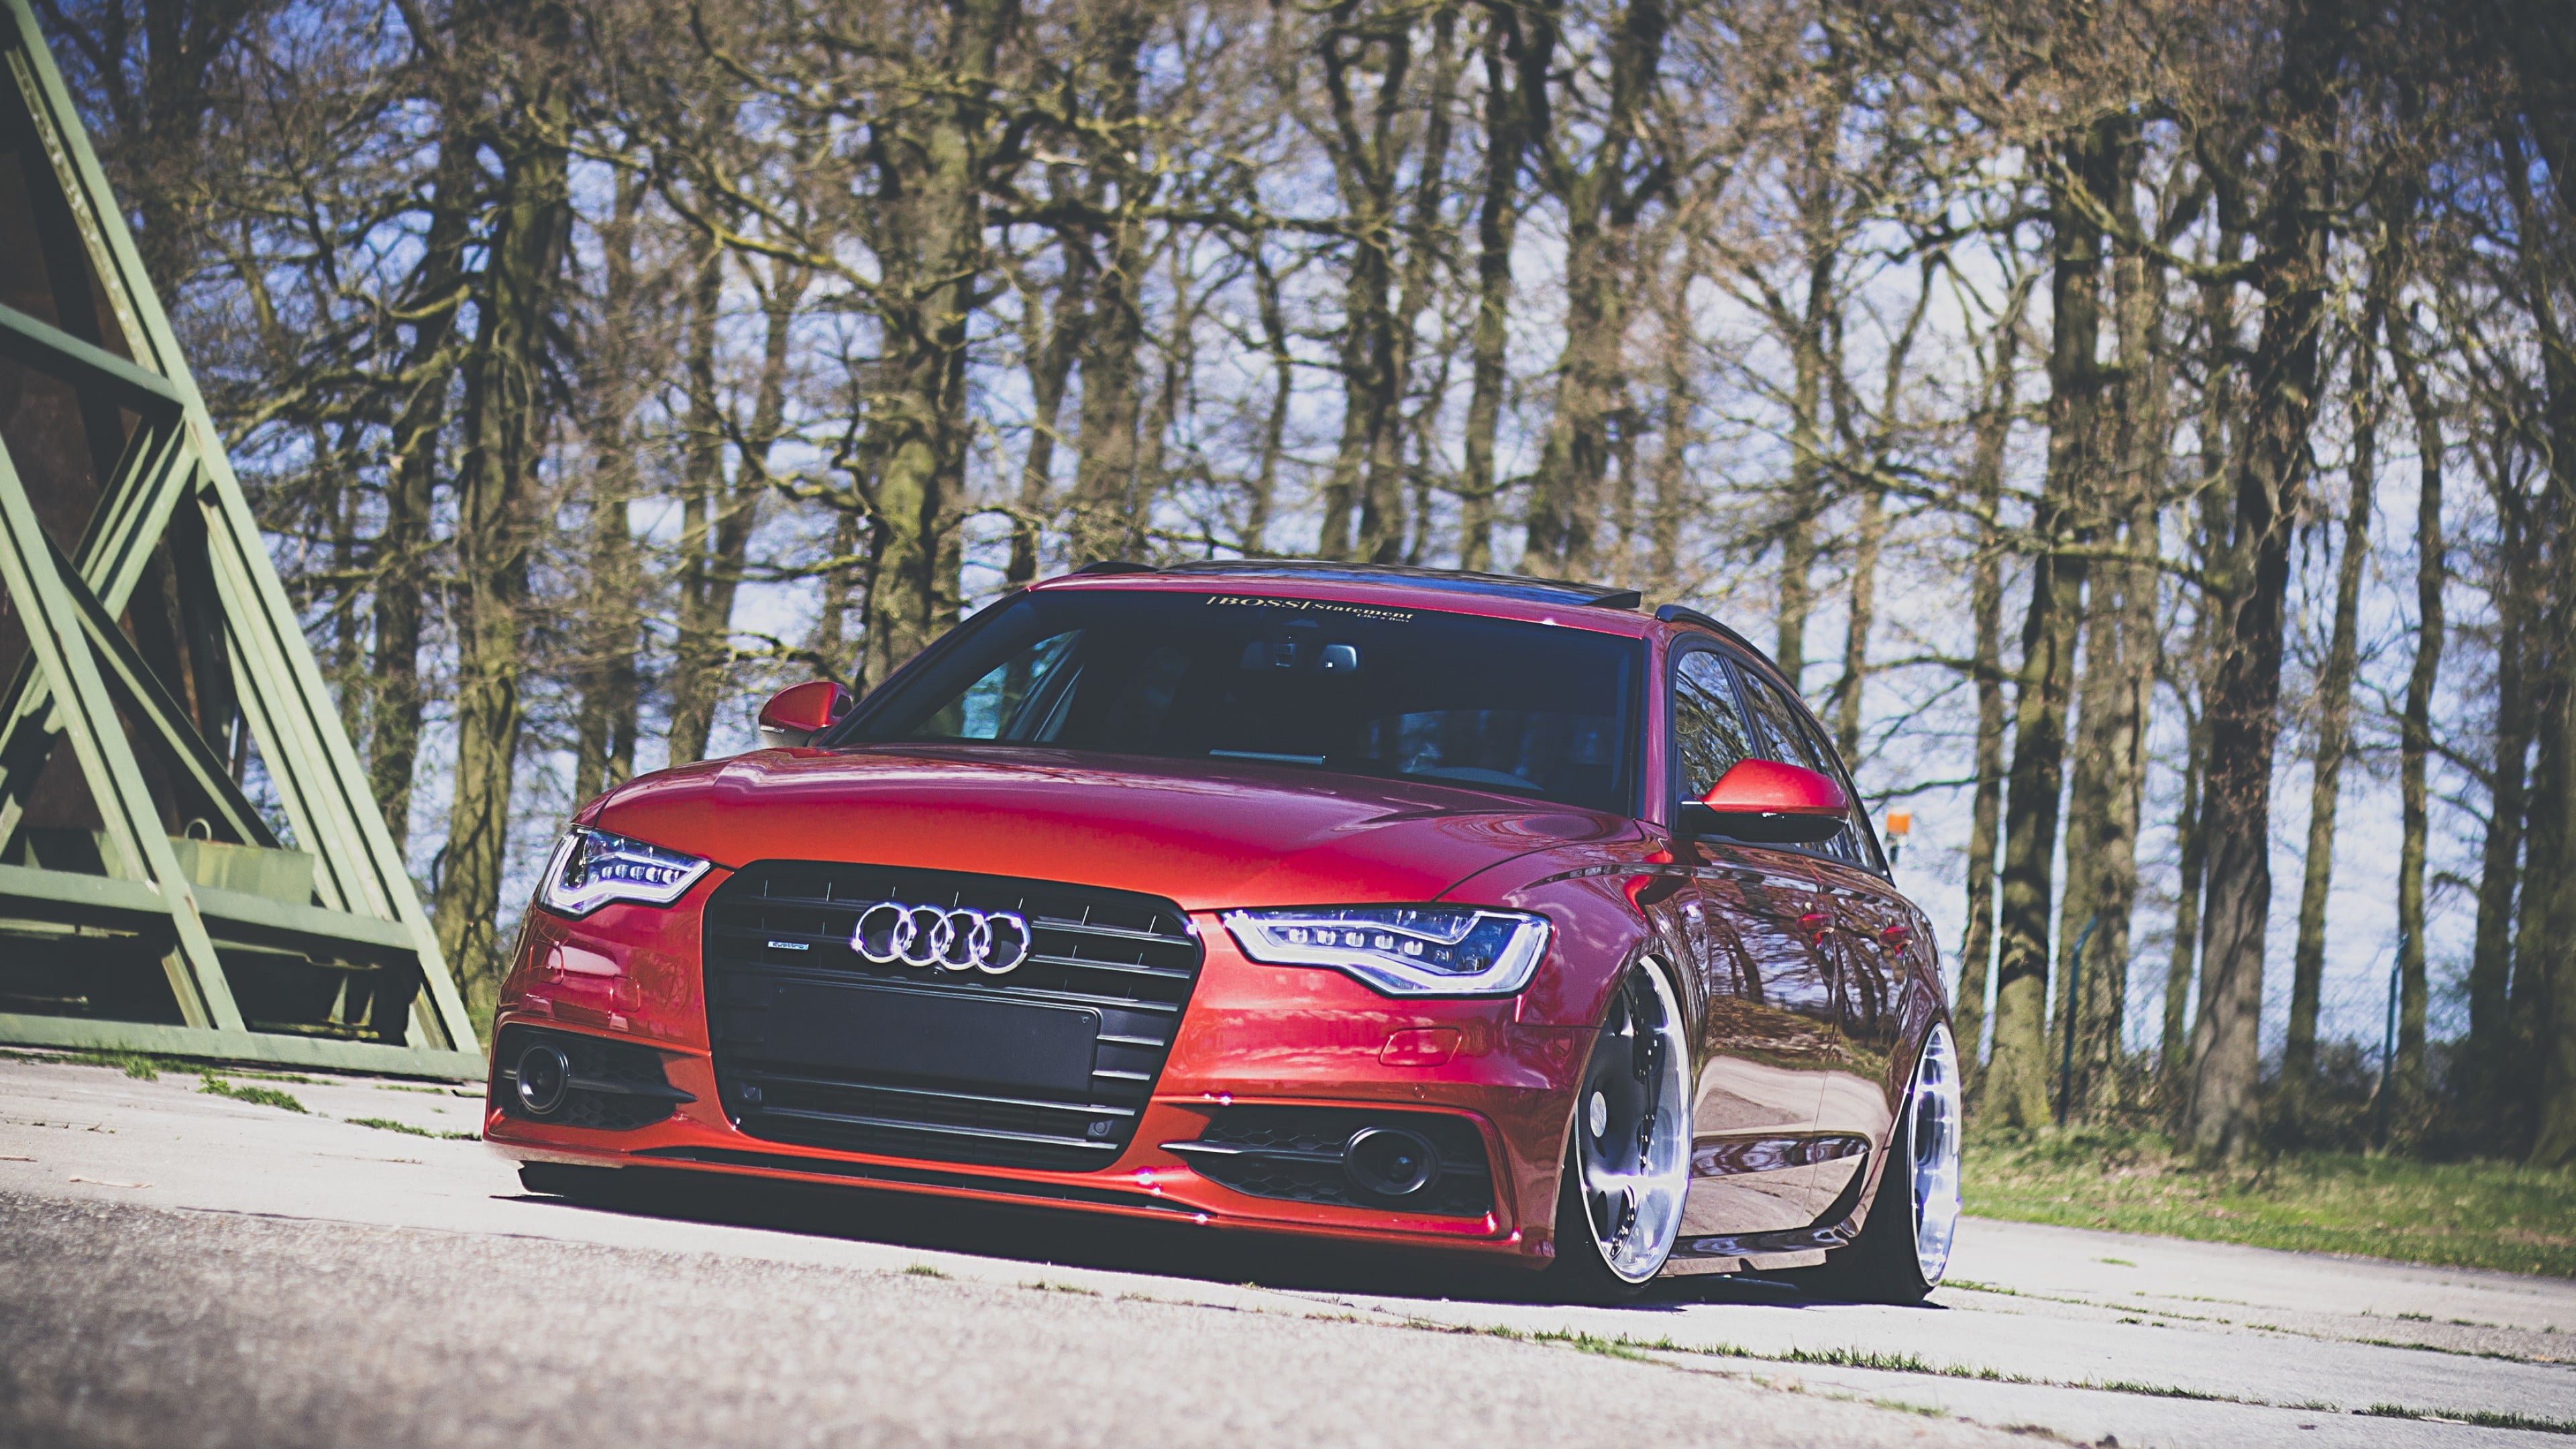 Red Audi Car, Audi S4, Audi A4, Stance, Car Hd Wallpaper - Audi A6 2015 Tuning , HD Wallpaper & Backgrounds